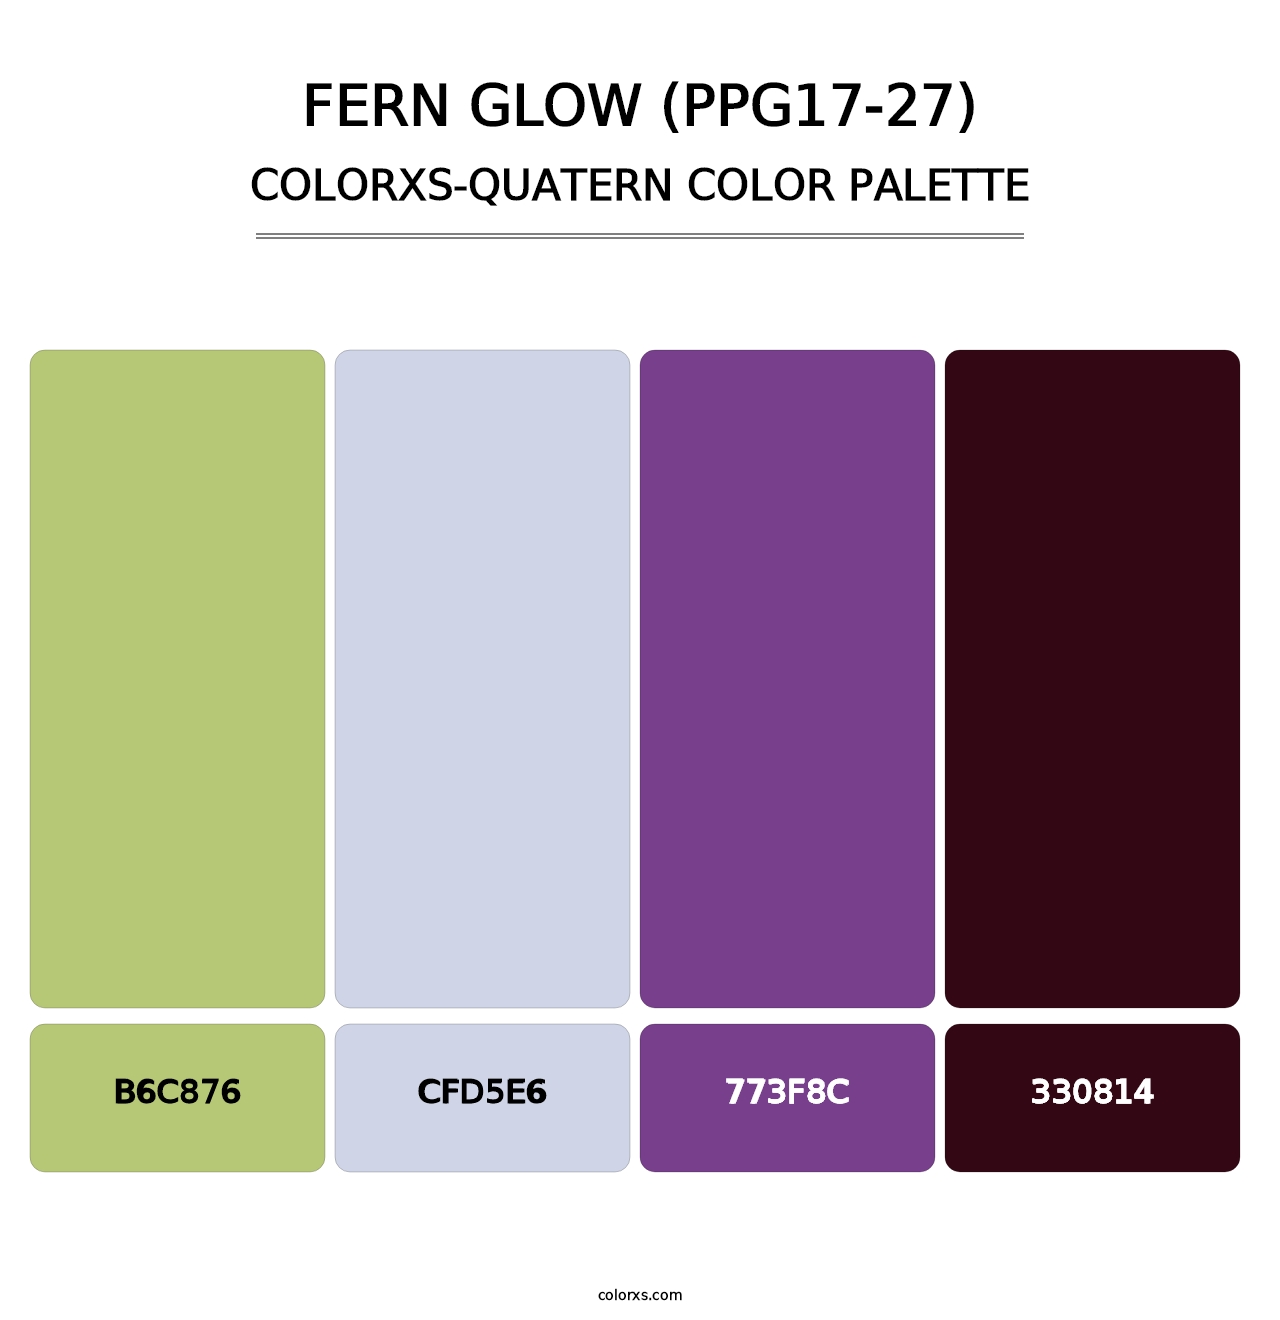 Fern Glow (PPG17-27) - Colorxs Quatern Palette